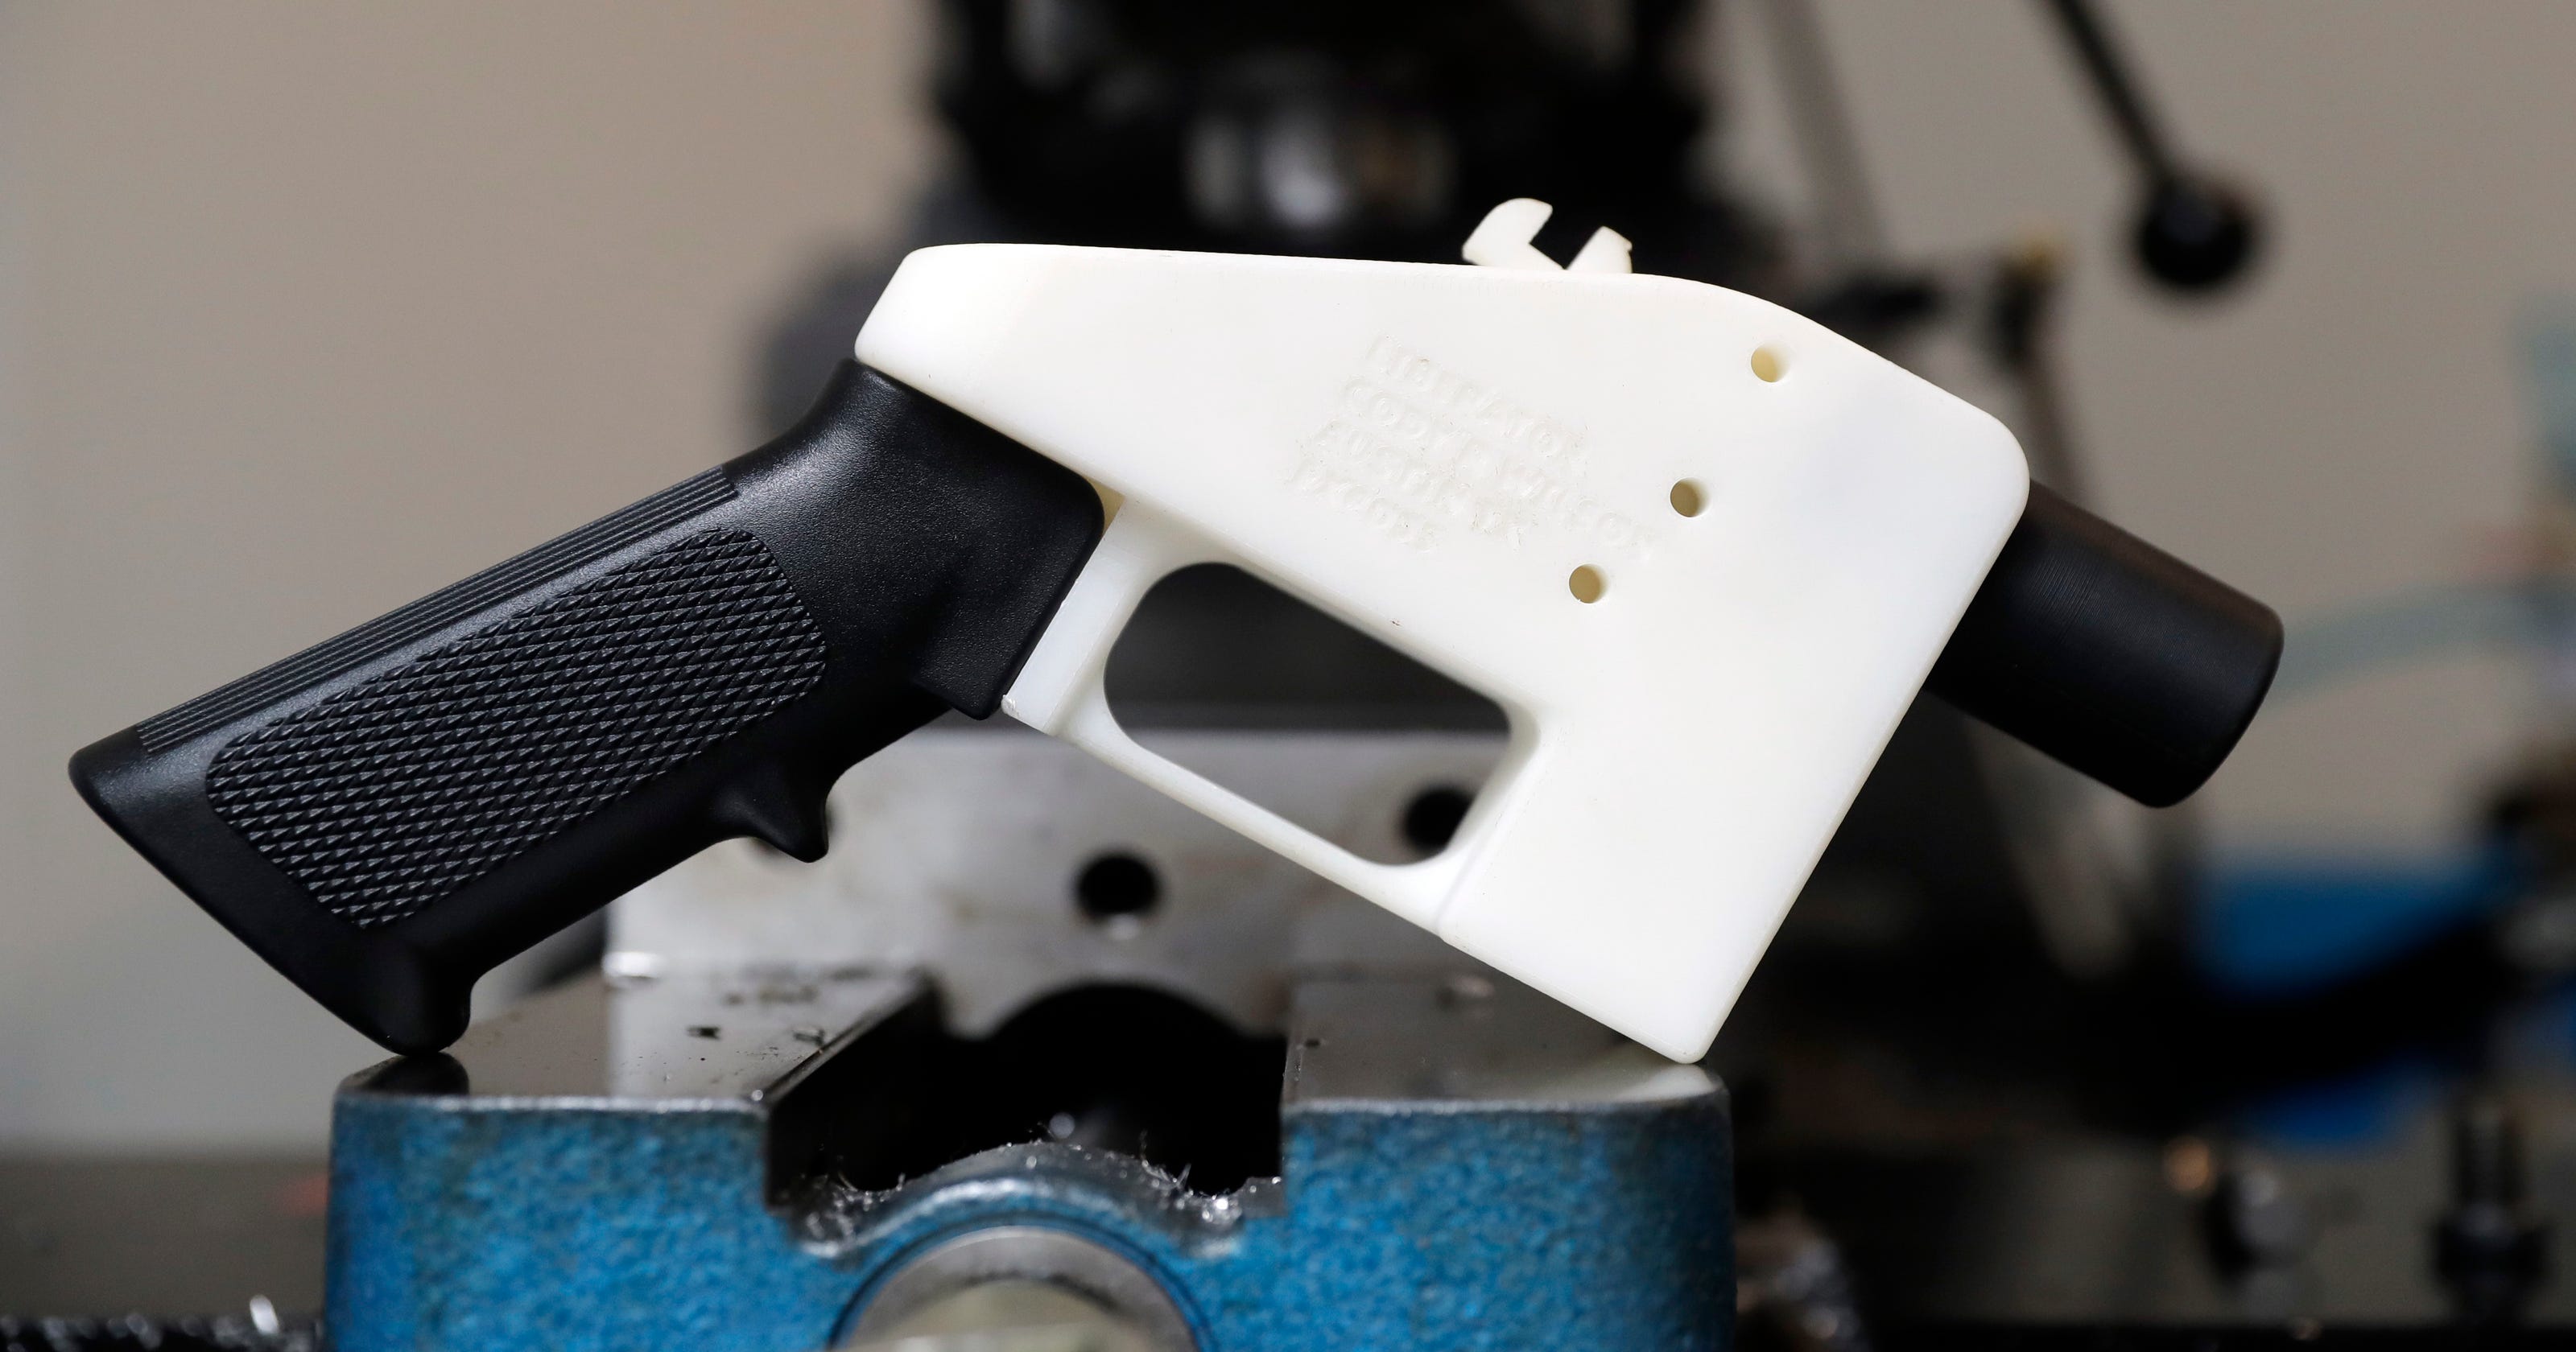 3d-gun-printing-cody-wilson-exposes-loophole-in-gun-control